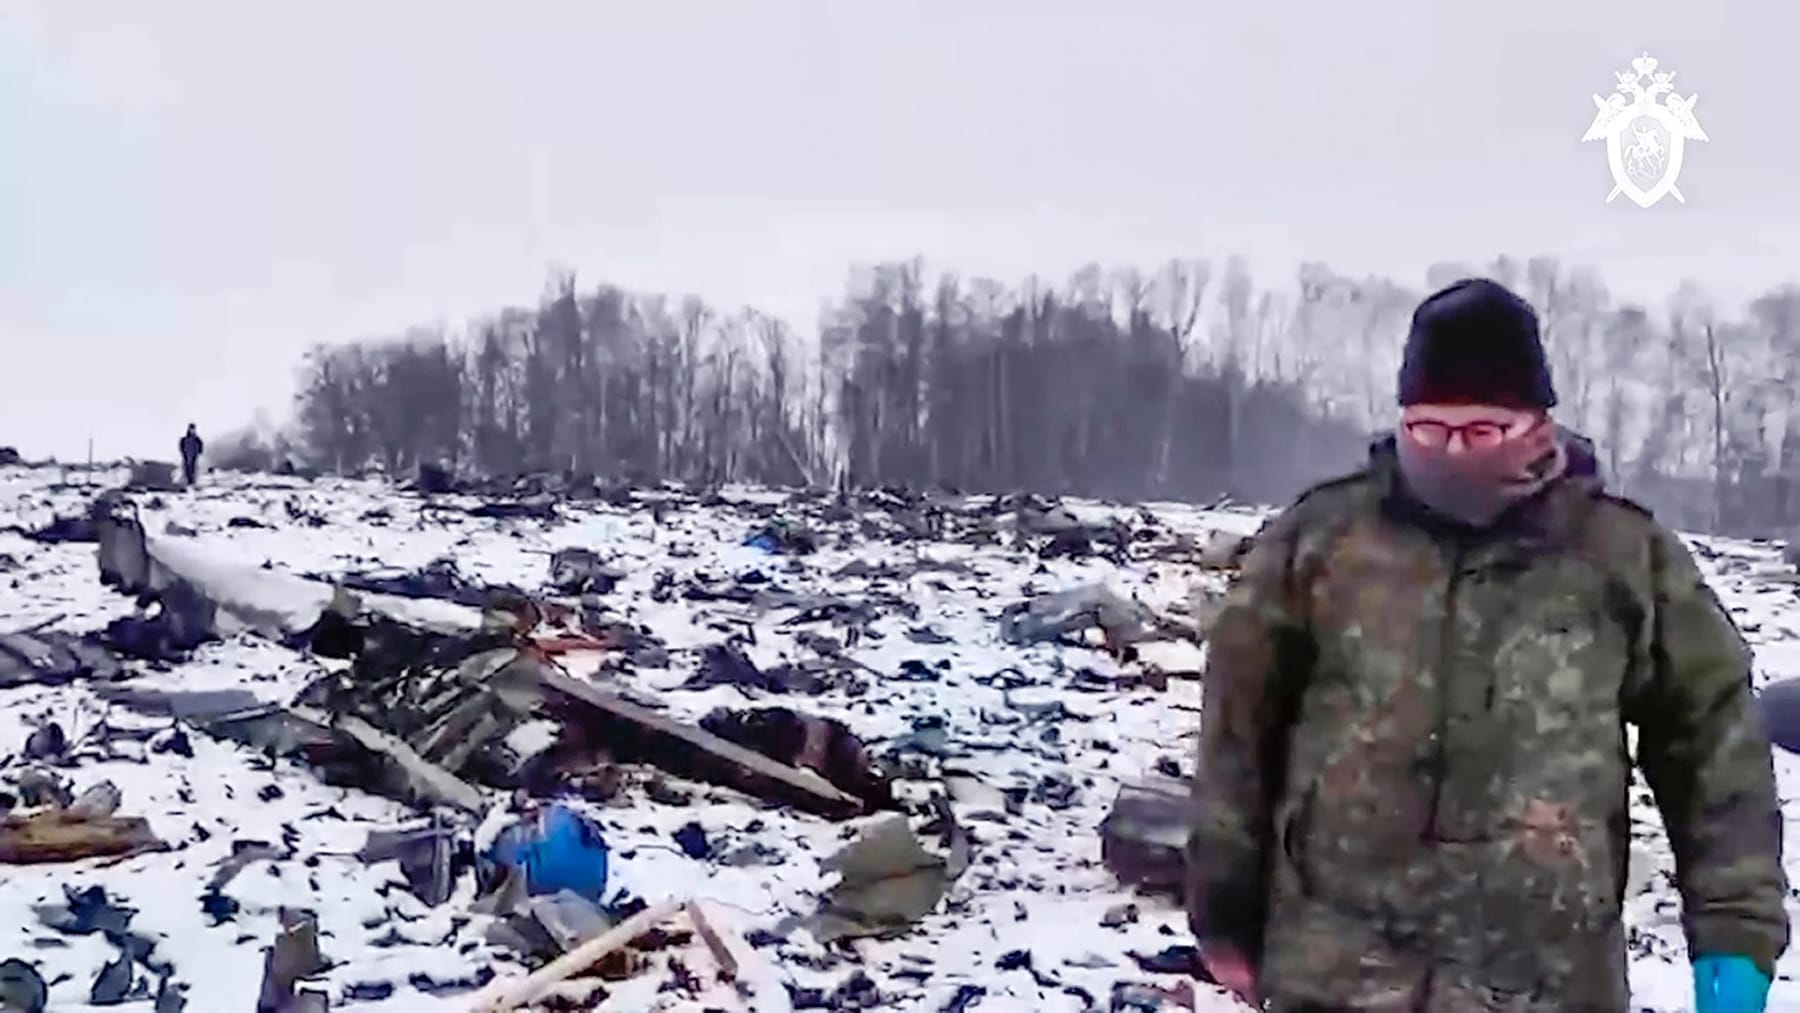 The plane crash over Belgorod still raises questions